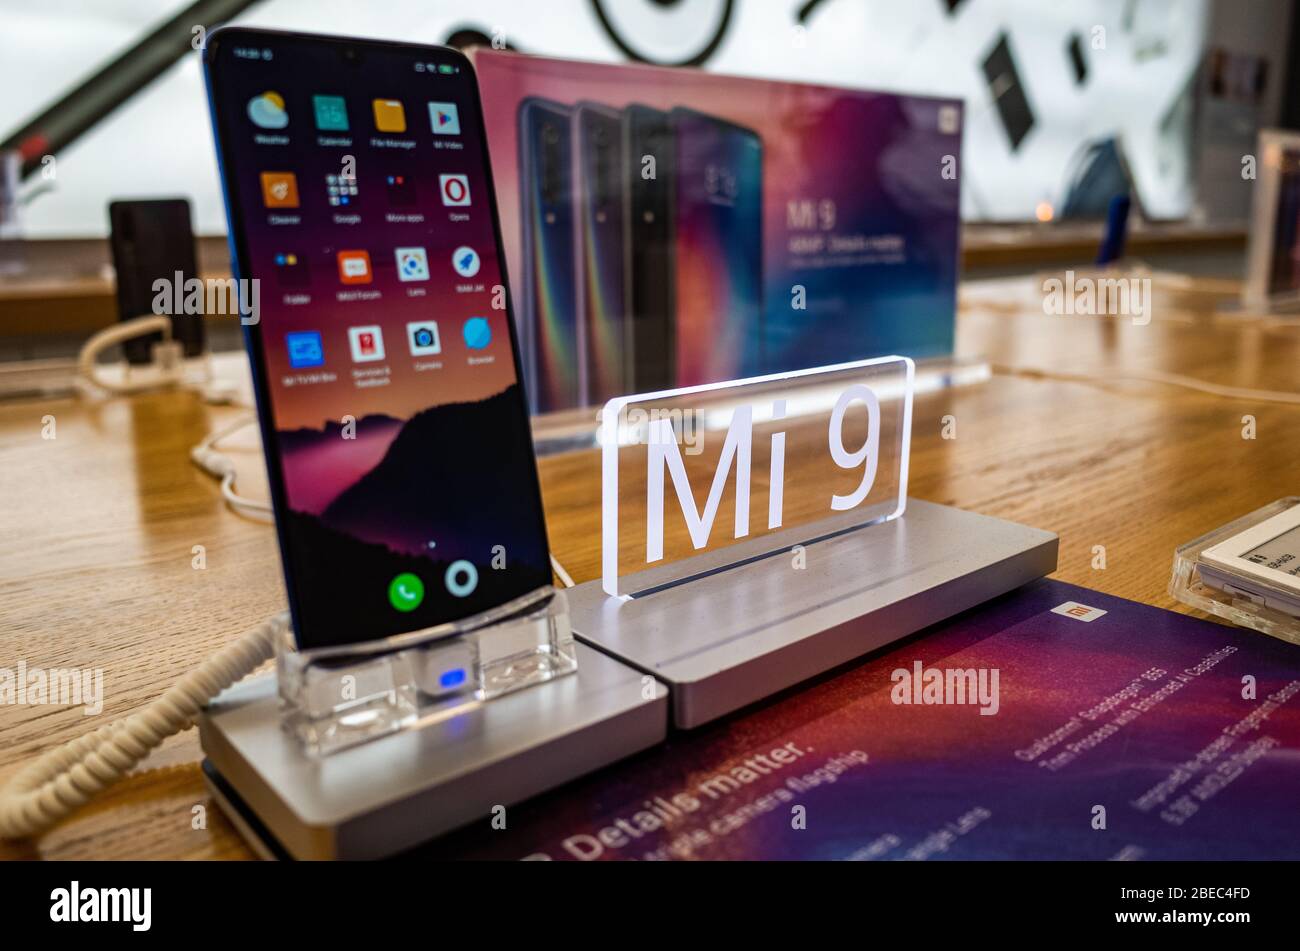 LONDRA - GENNAIO 2020: Smartphone Xiaomi Mi9 in ambiente retail. Azienda elettronica cinese globale Foto Stock